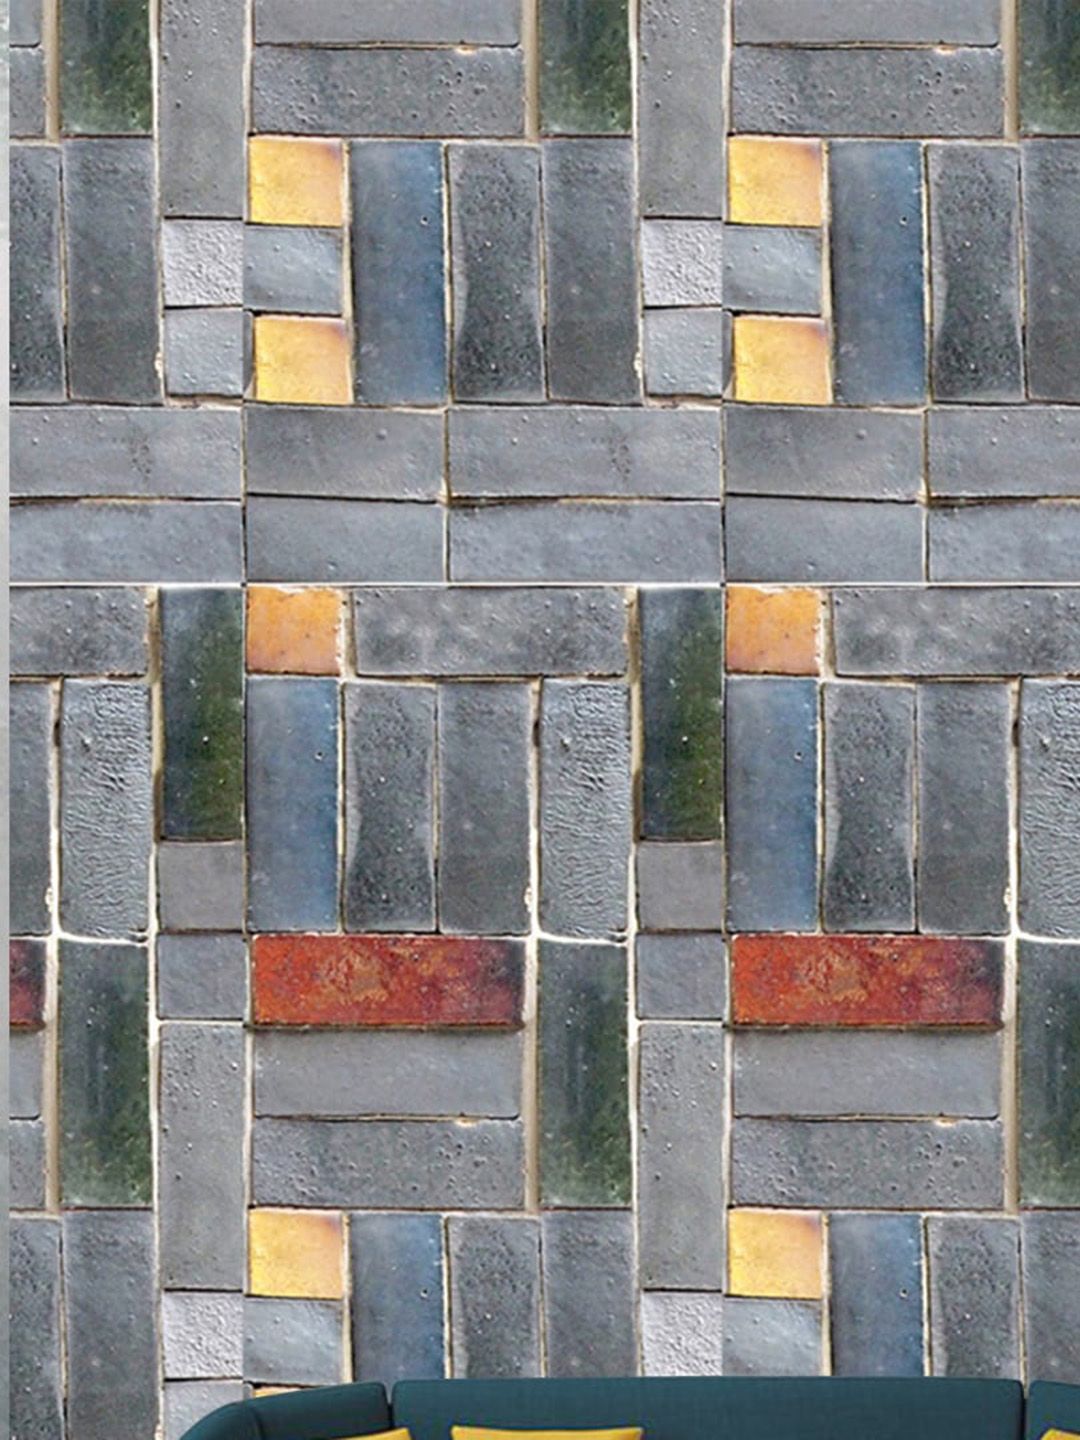 Jaamso Royals Grey Antique Stone Brick WallPaper Price in India